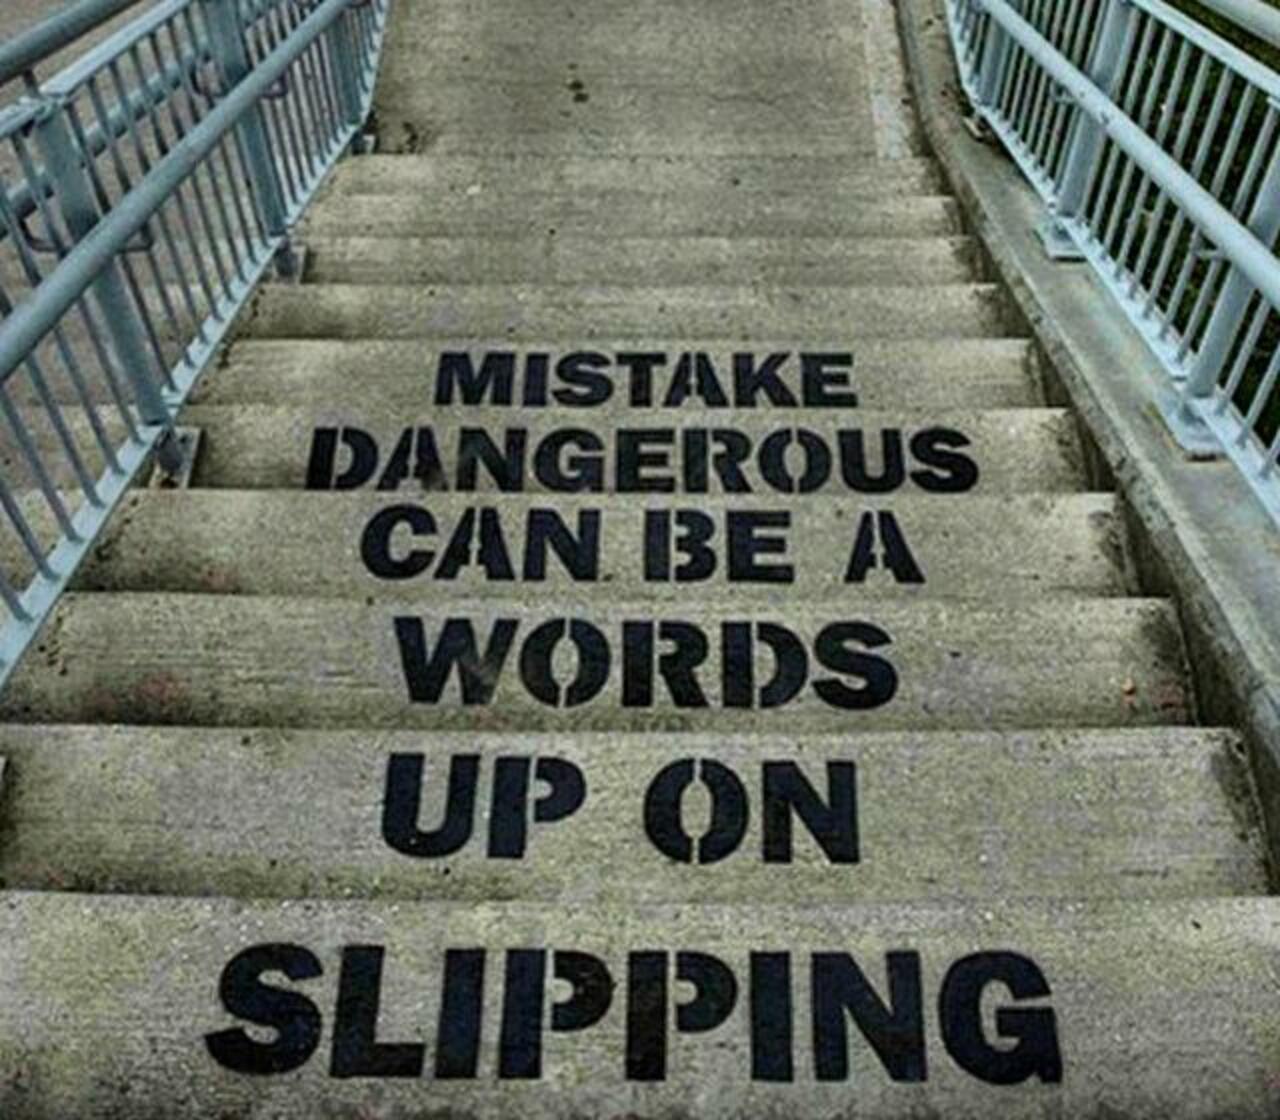 Slipping up on words can be a dangerous mistake 

Street Art by m.obstr 

#art #arte #graffiti #streetart http://t.co/BfsH4sKKsS